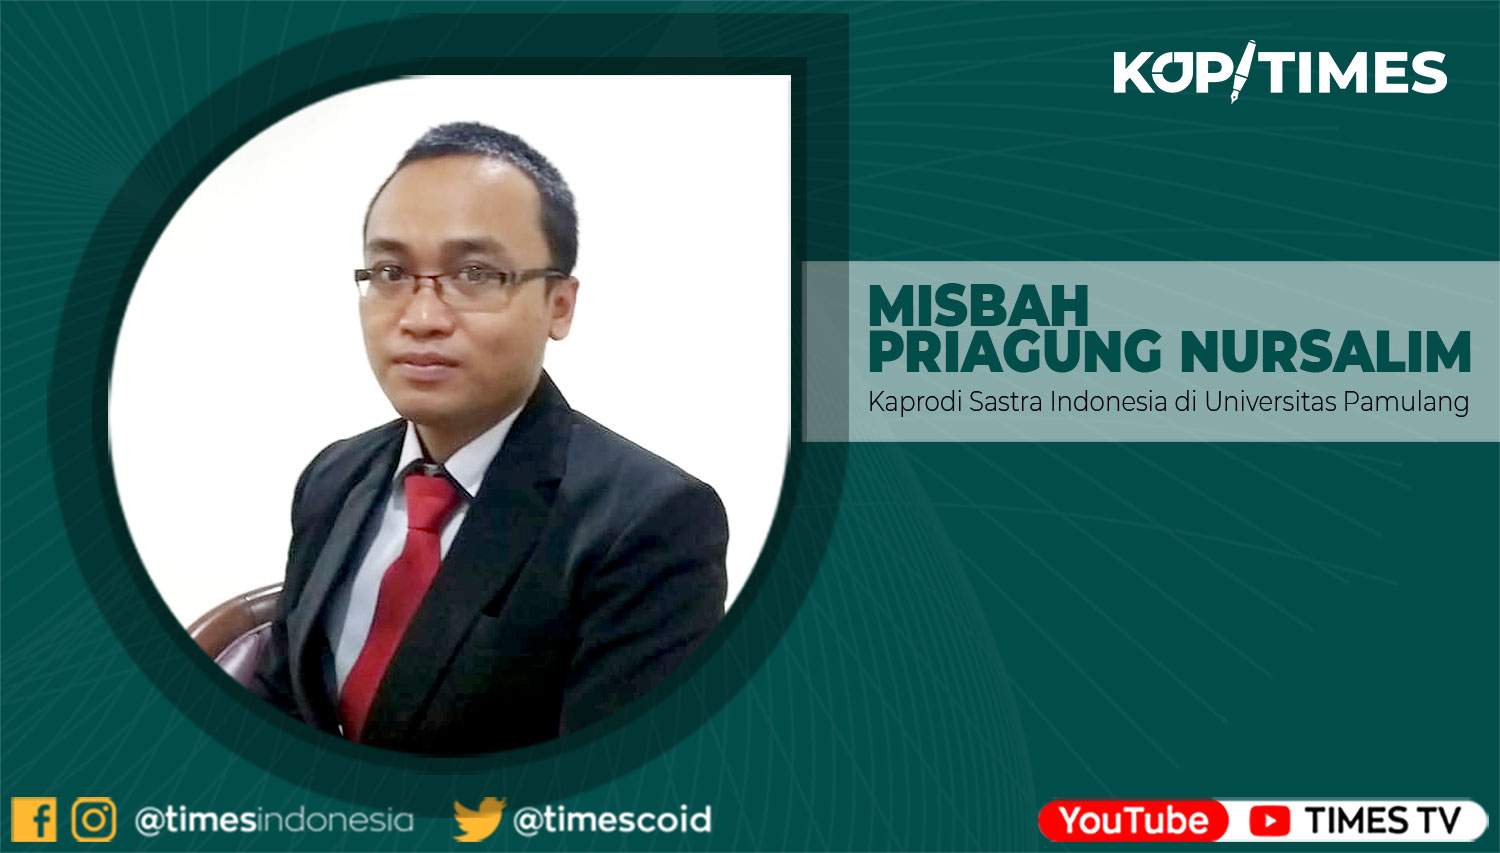 Misbah Priagung Nursalim, S.S., M.Pd.; Kaprodi Sastra Indonesia di Universitas Pamulang.